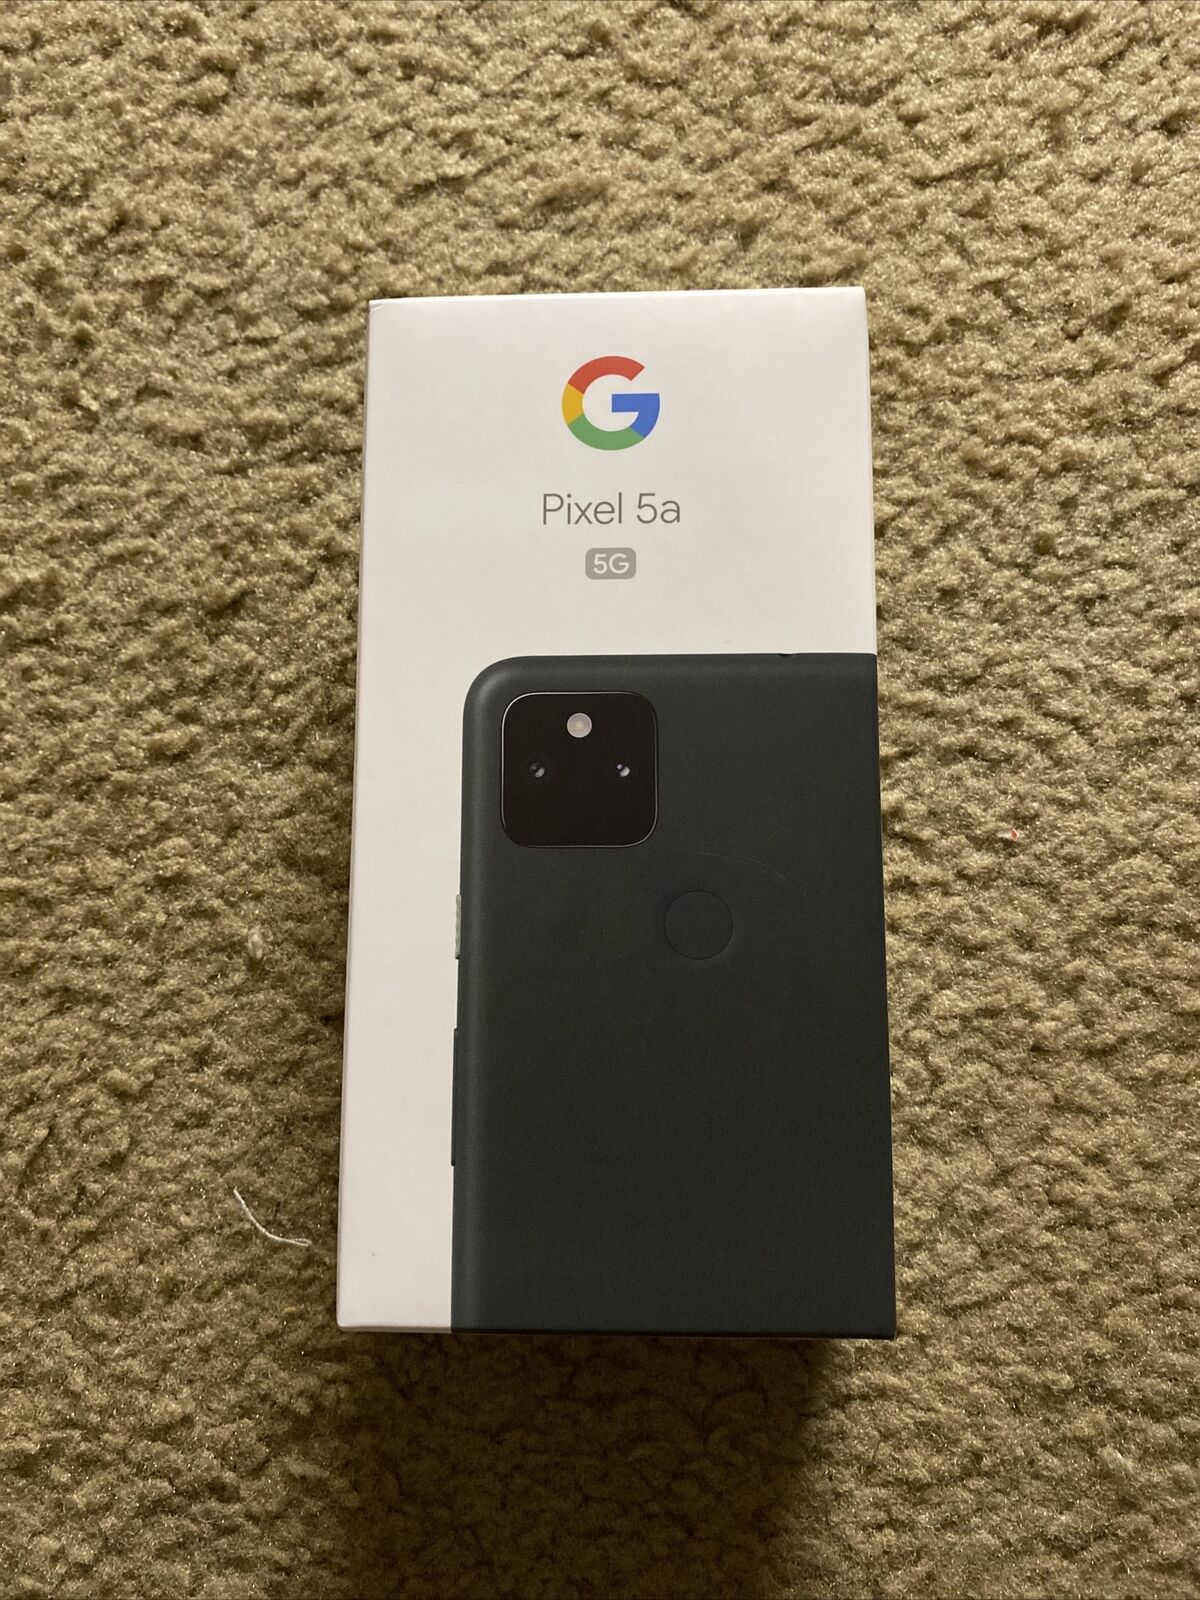 Google Pixel 5a 5G G1F8F - 128GB - Mostly Black (Unlocked 